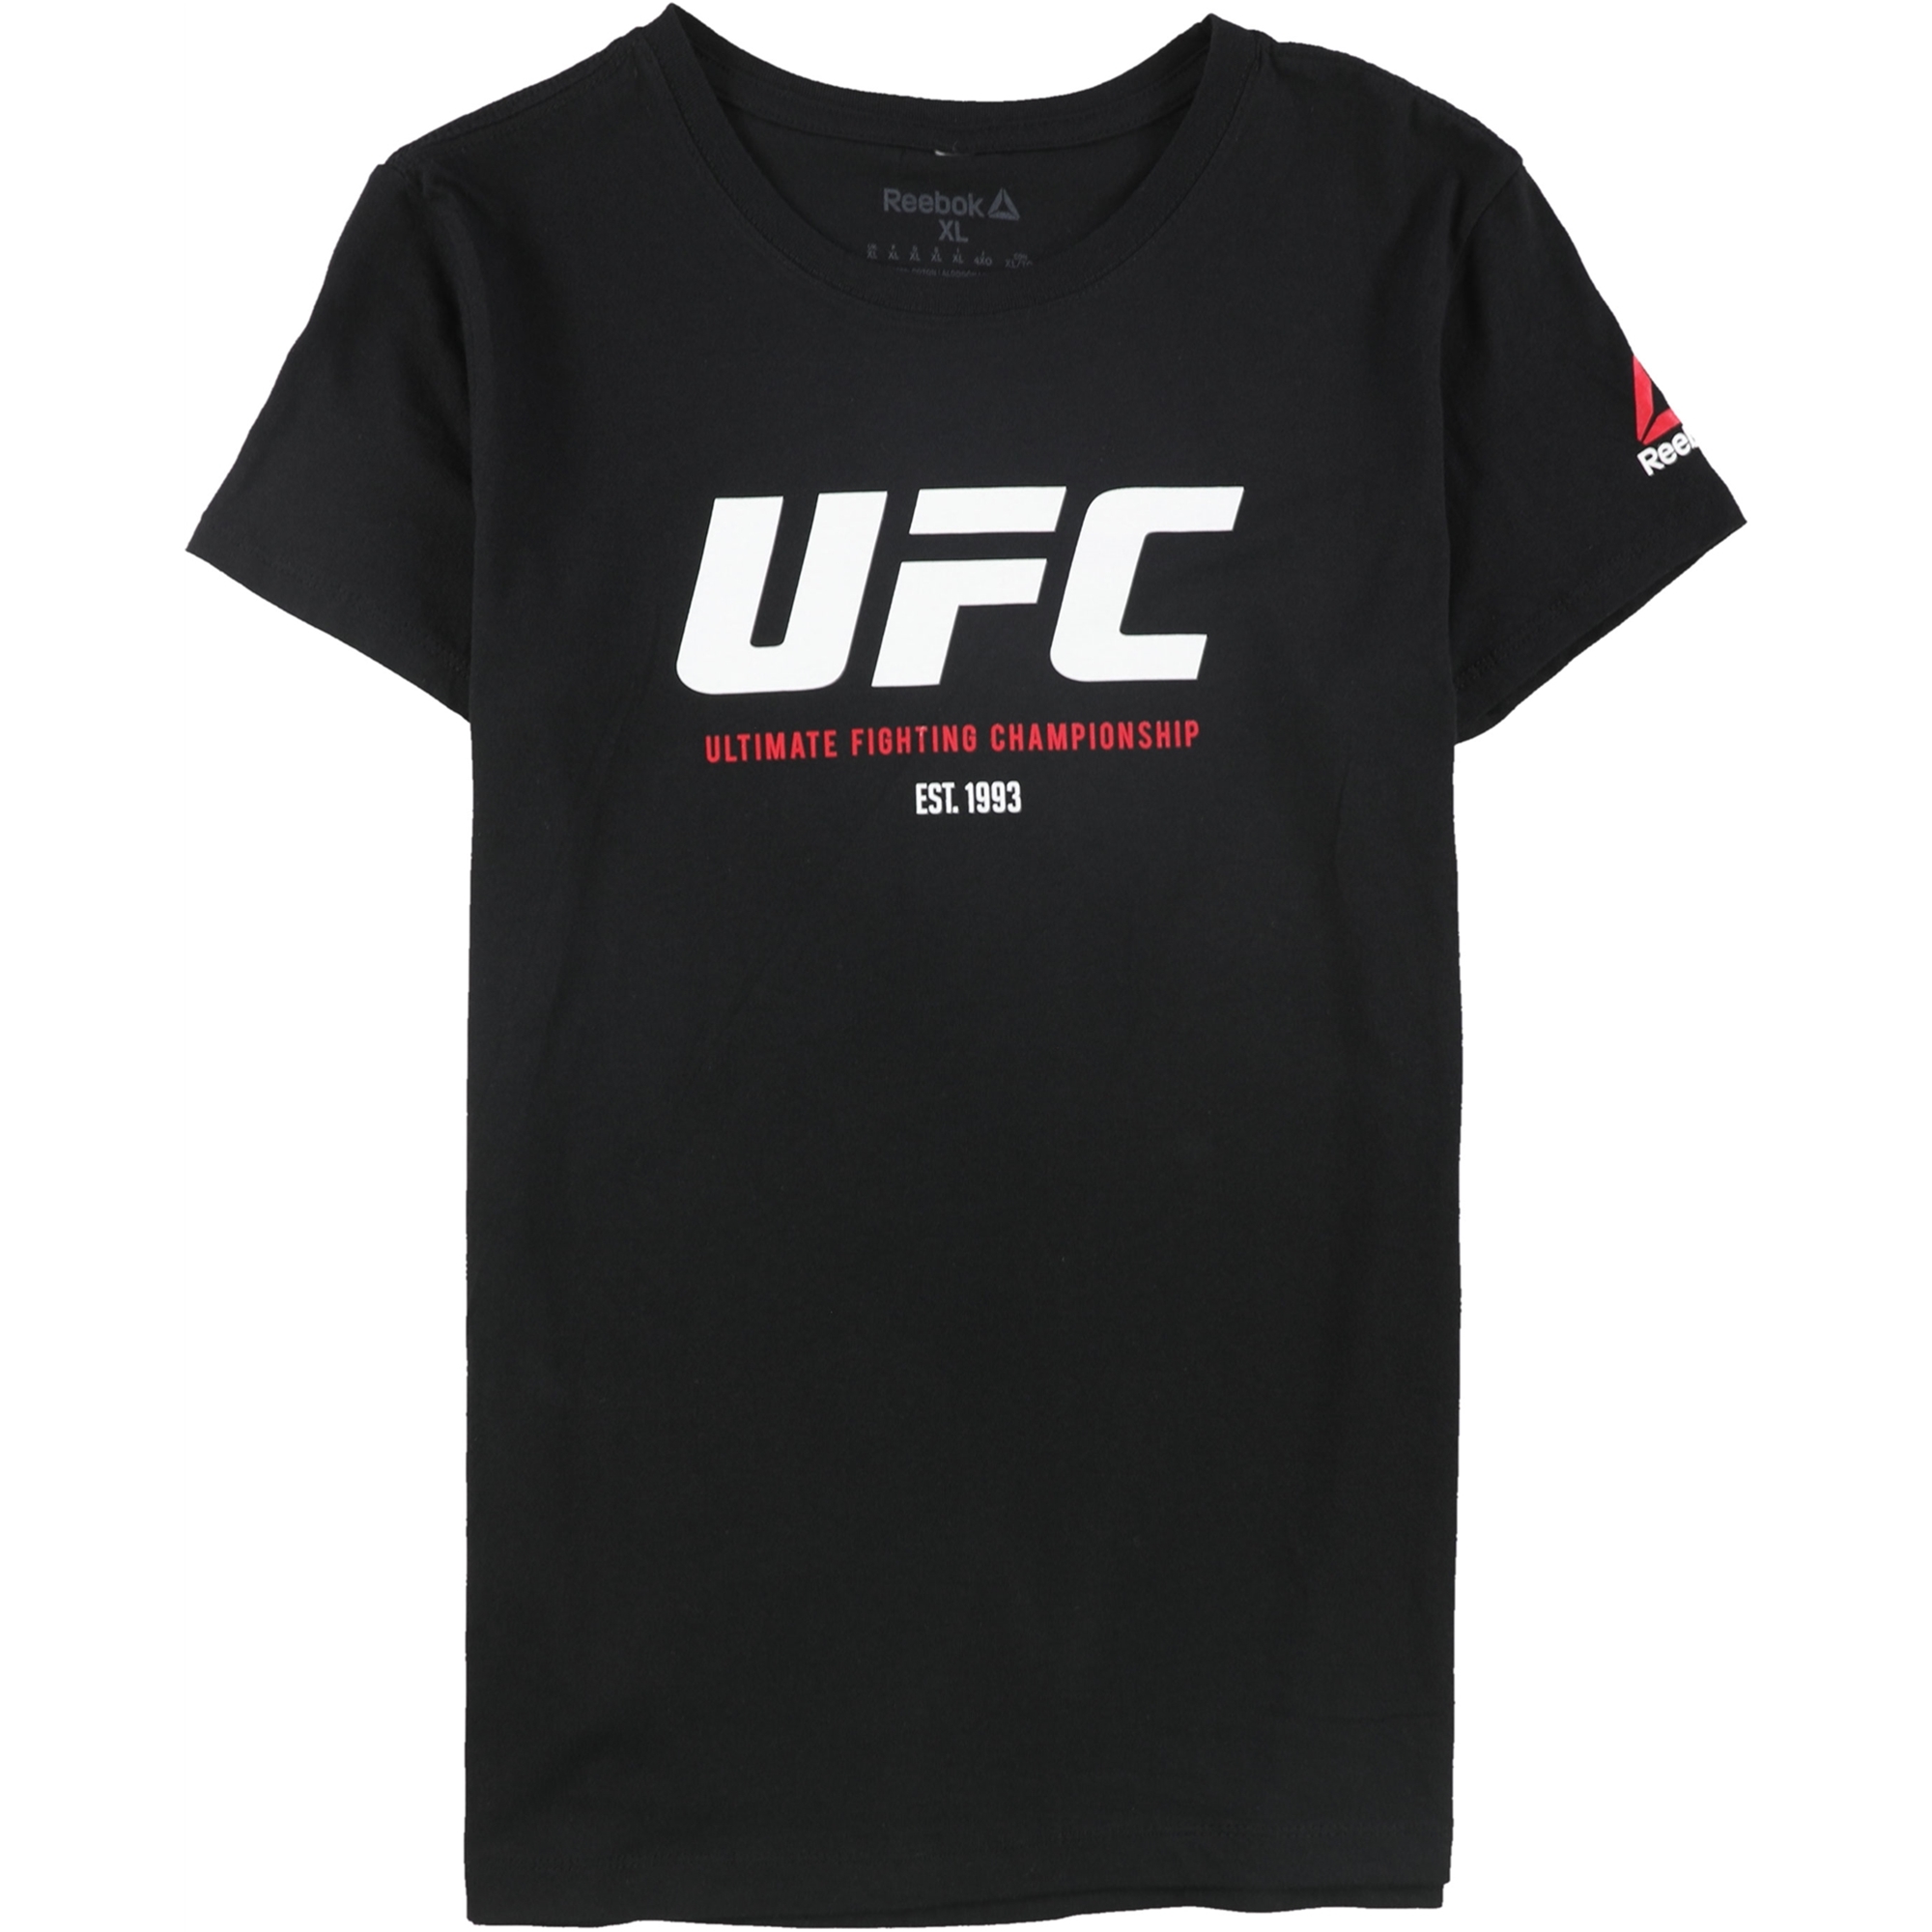 Reebok Womens UFC Est 1993 Graphic T-Shirt, Black, Small - image 1 of 1